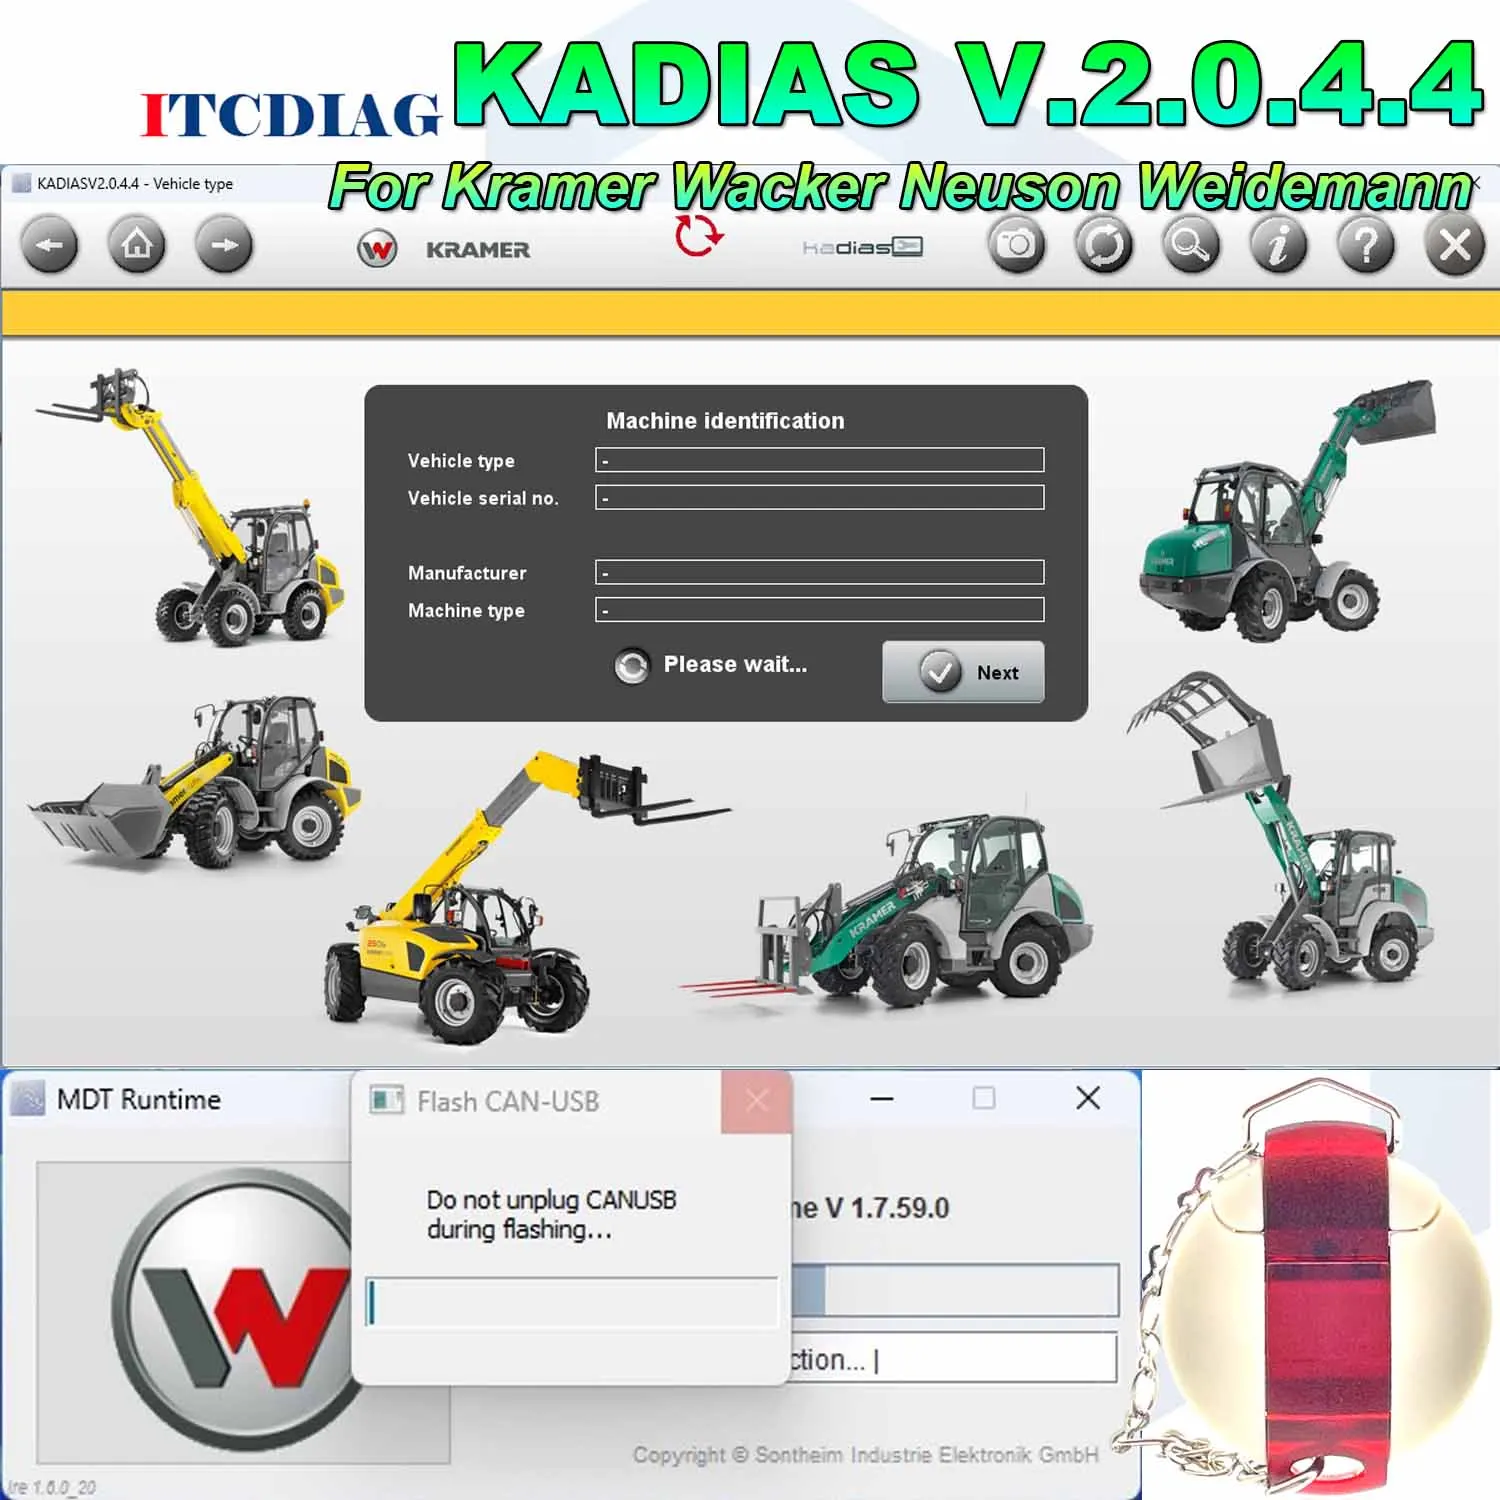 

KADIAS v.2.0.4.4 UNLIMITED for Kramer Wacker Neuson Weidemann Supports CANFox EC2112 IFM USB/CAN-RS232 for Wheelloader Excavator